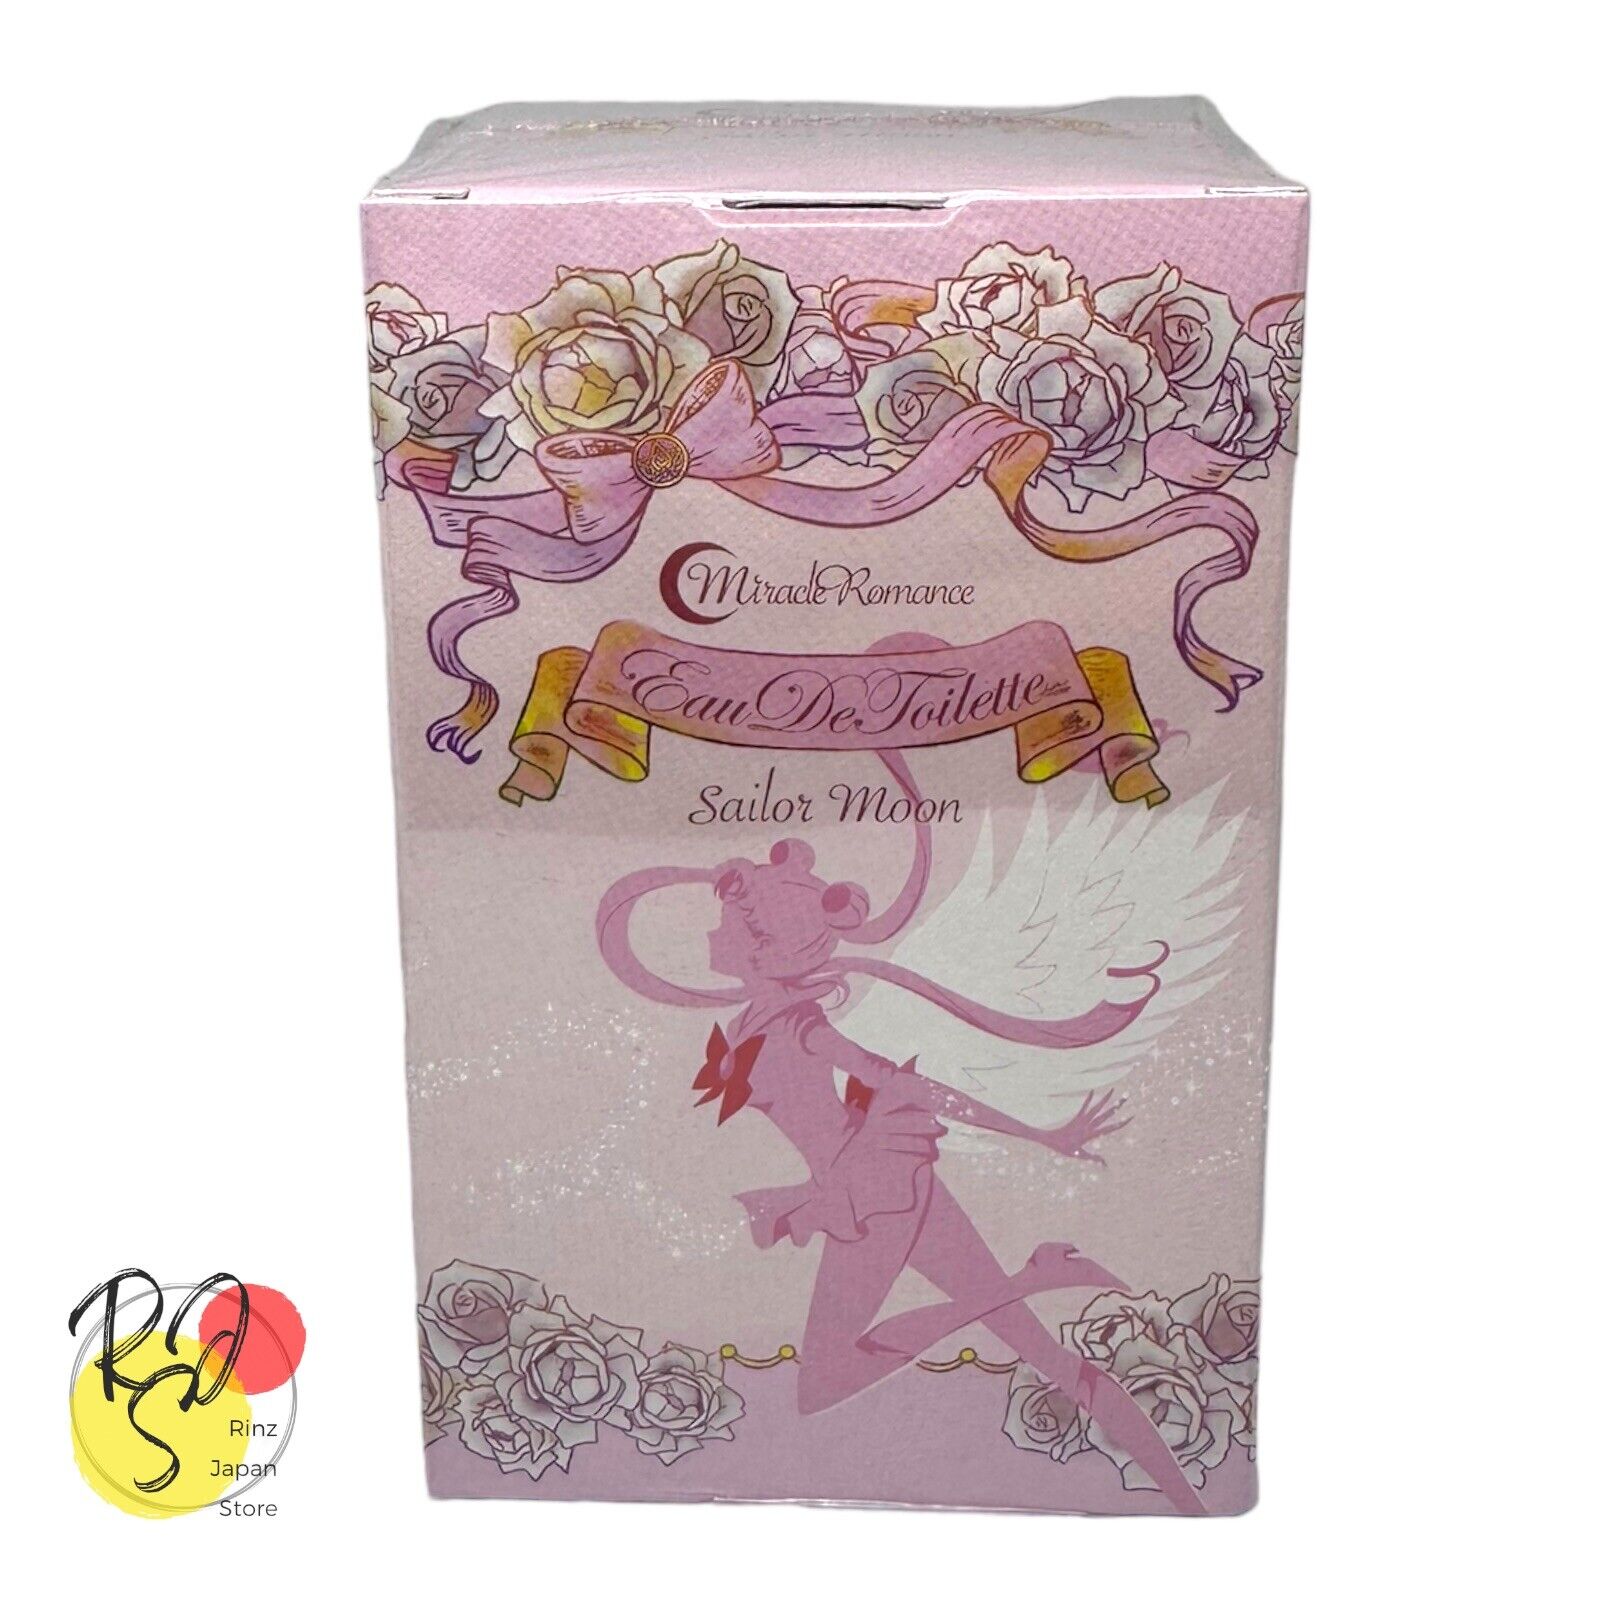 Sailor Moon Miracle Romance eau de toilette 50ml Fragrance  perfume cologne